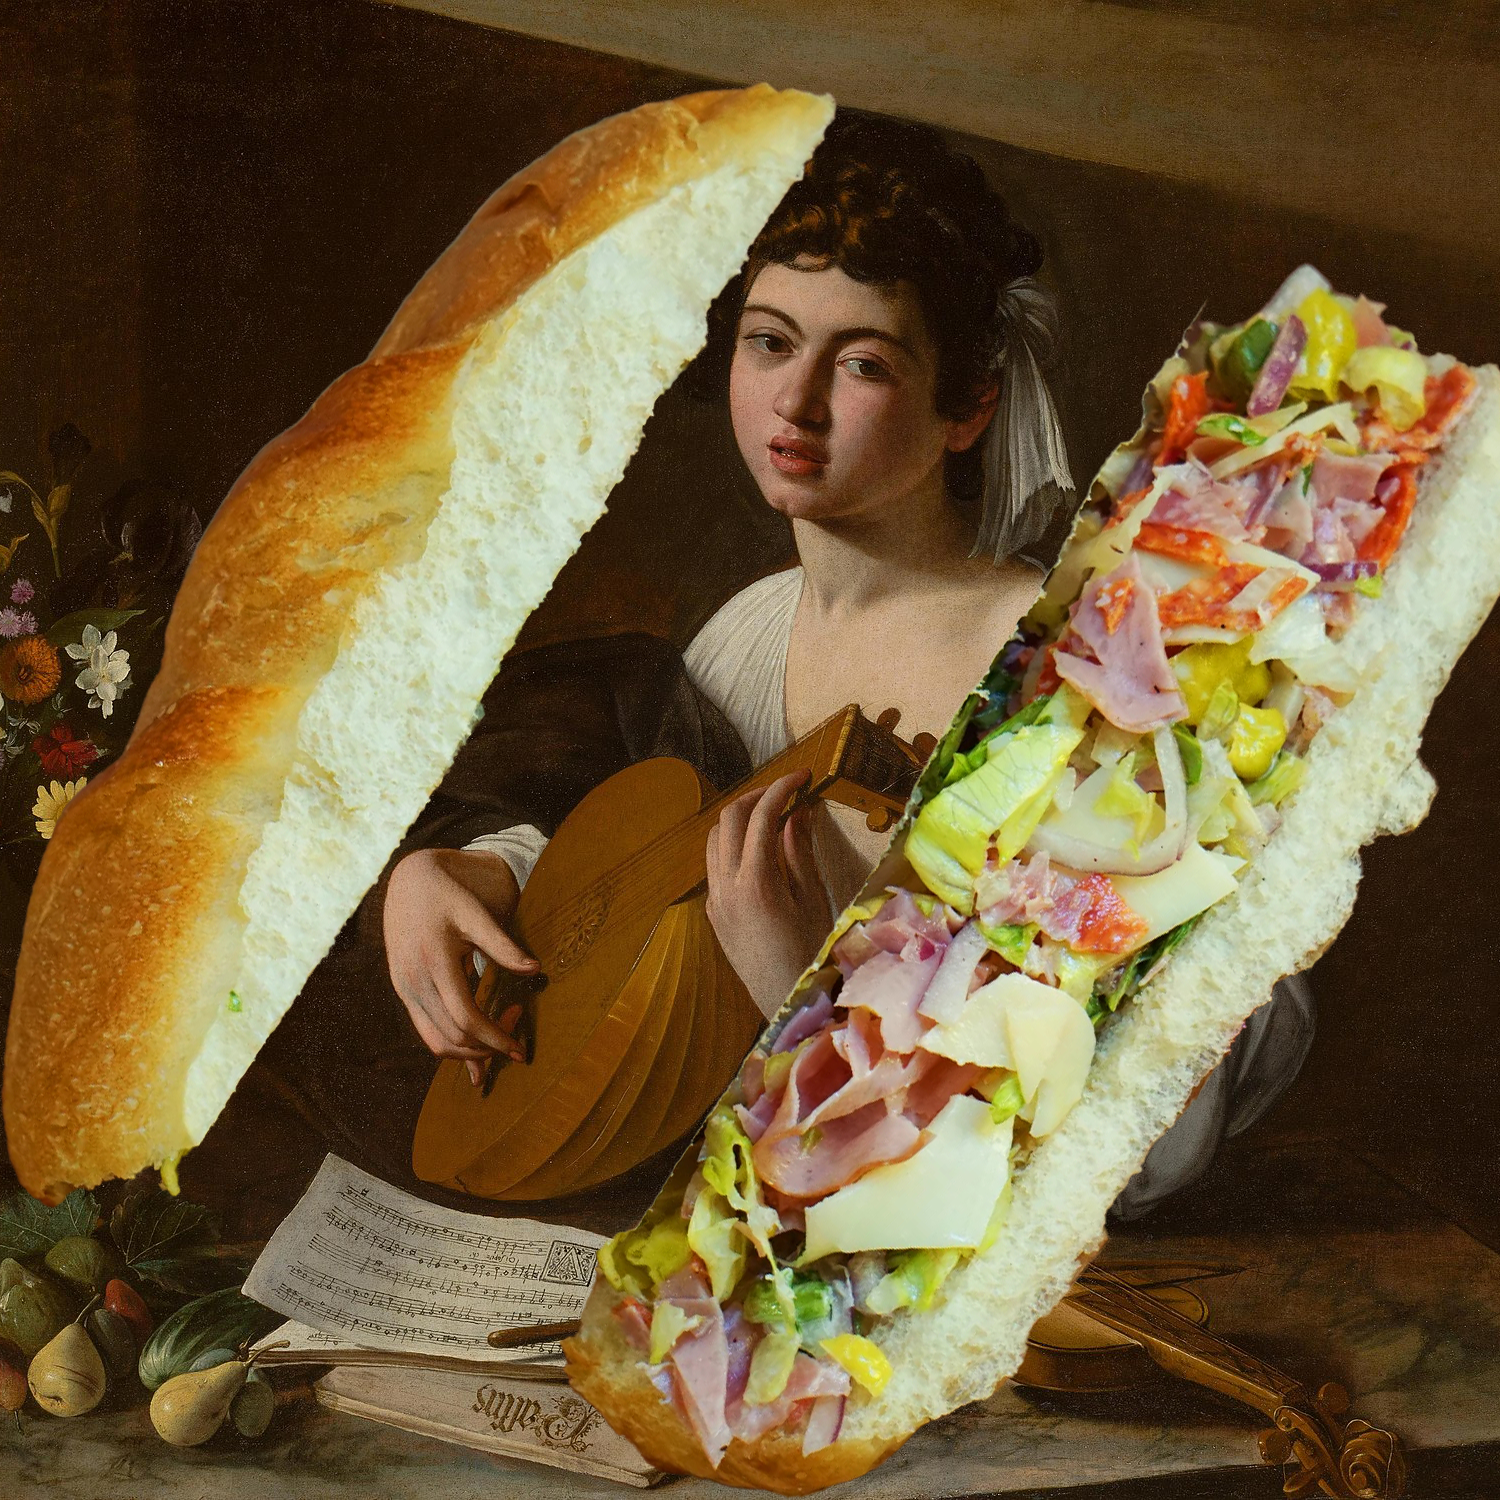 Caravaggio's The Lute Player in a sandwich.